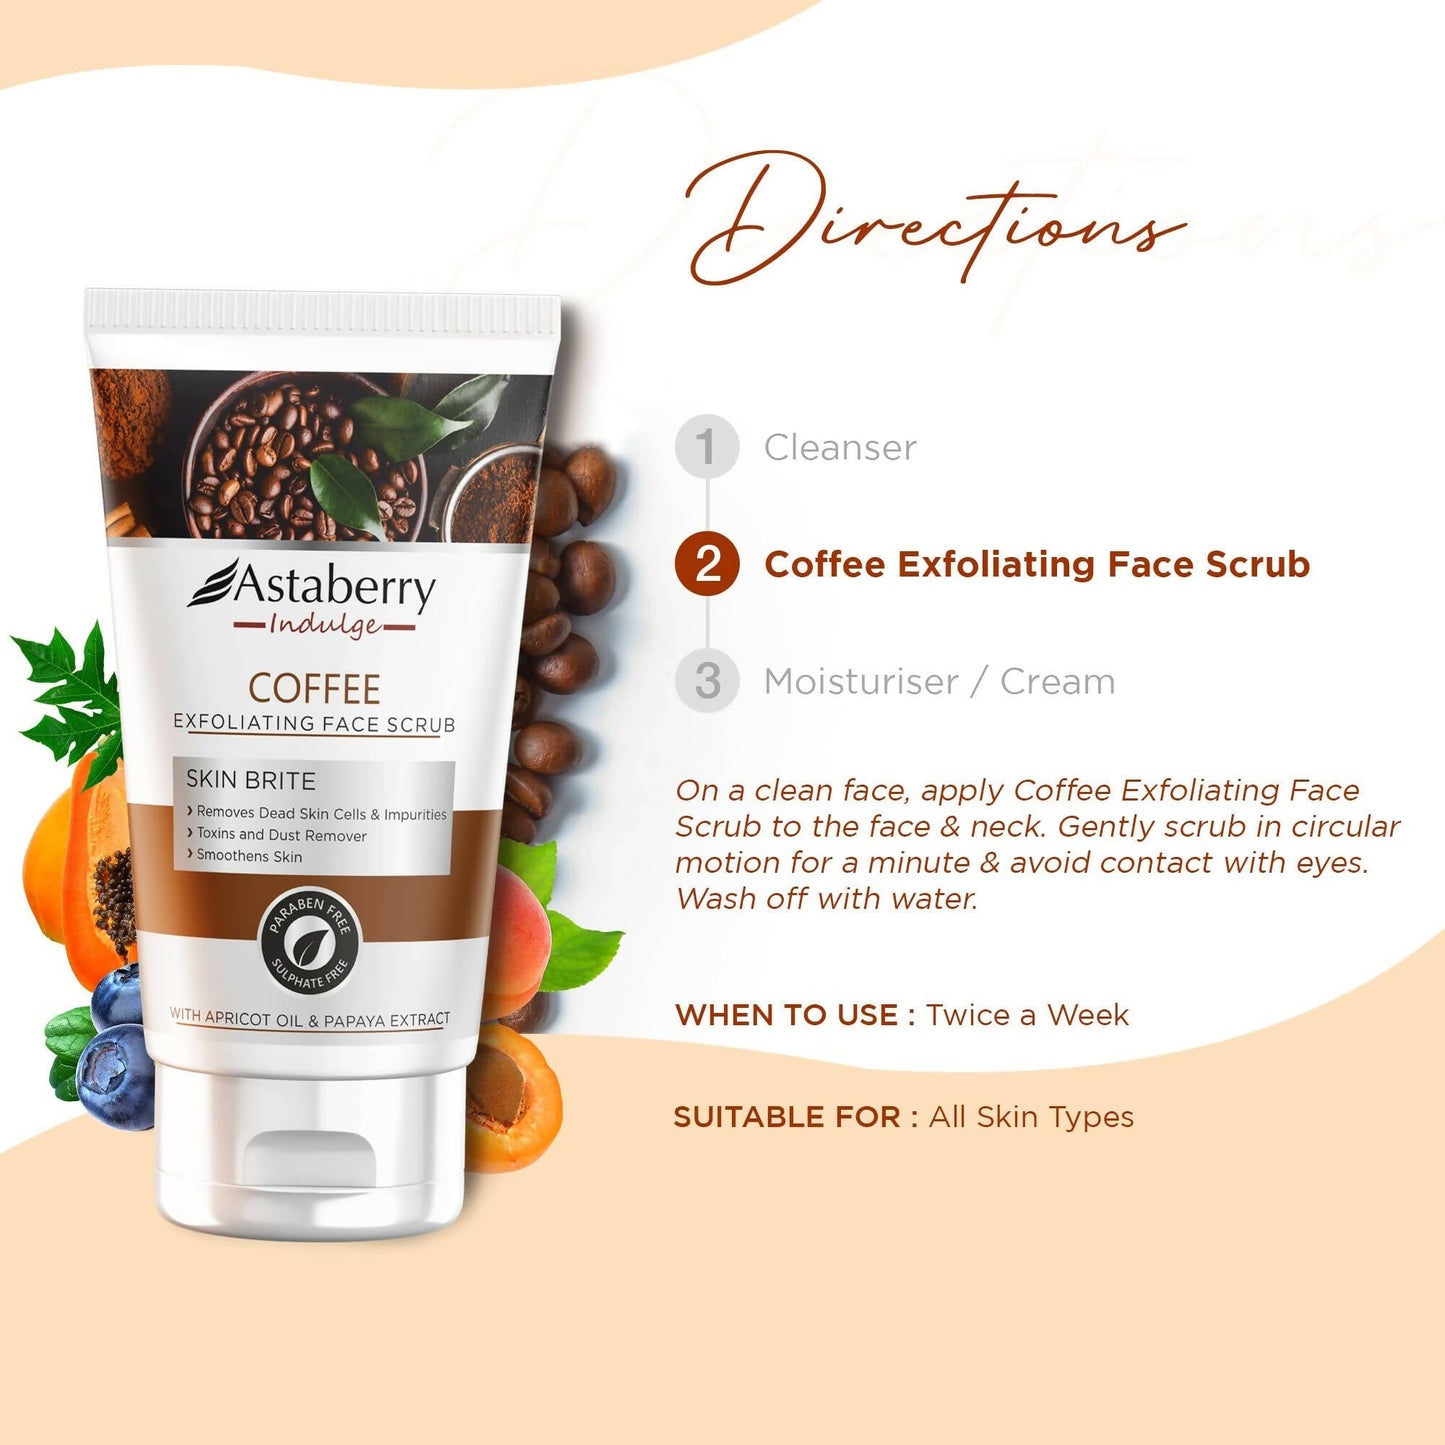 Astaberry Indulge Coffee Exfoliating Face Scrub